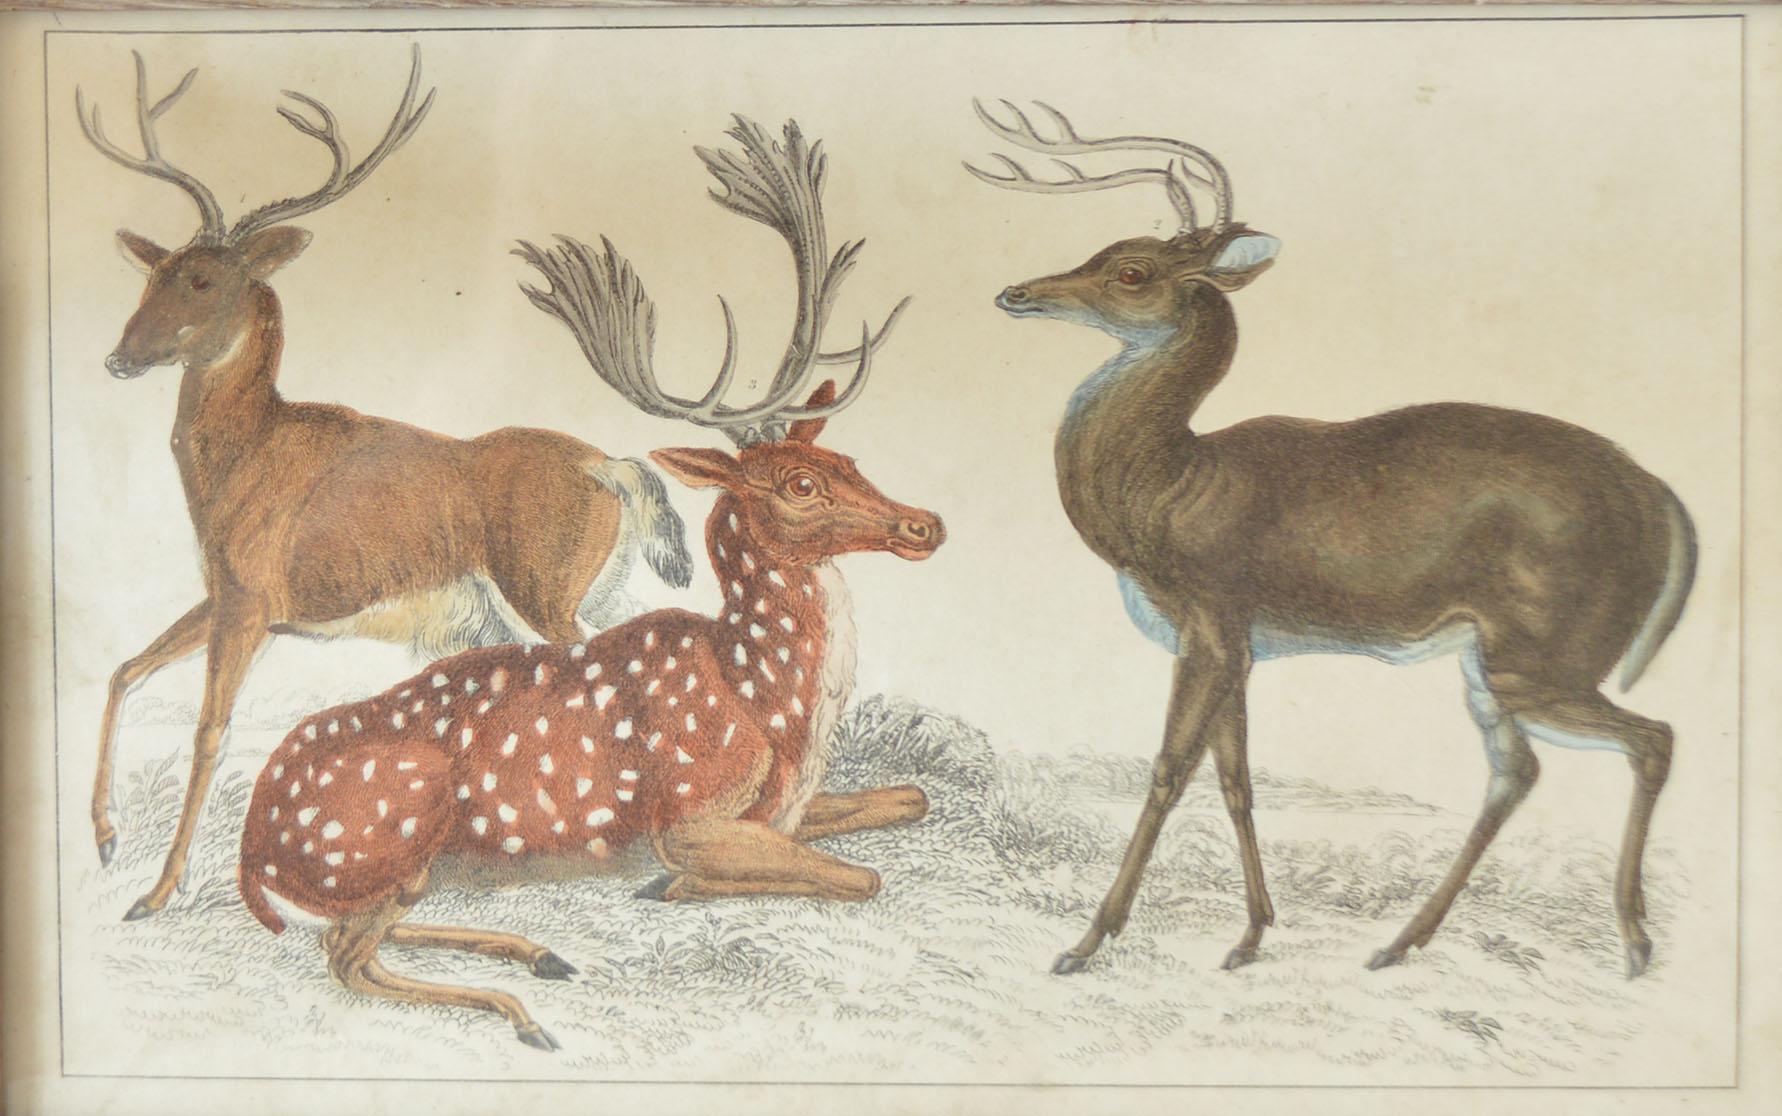 Folk Art Original Antique Print of Deer, 1847